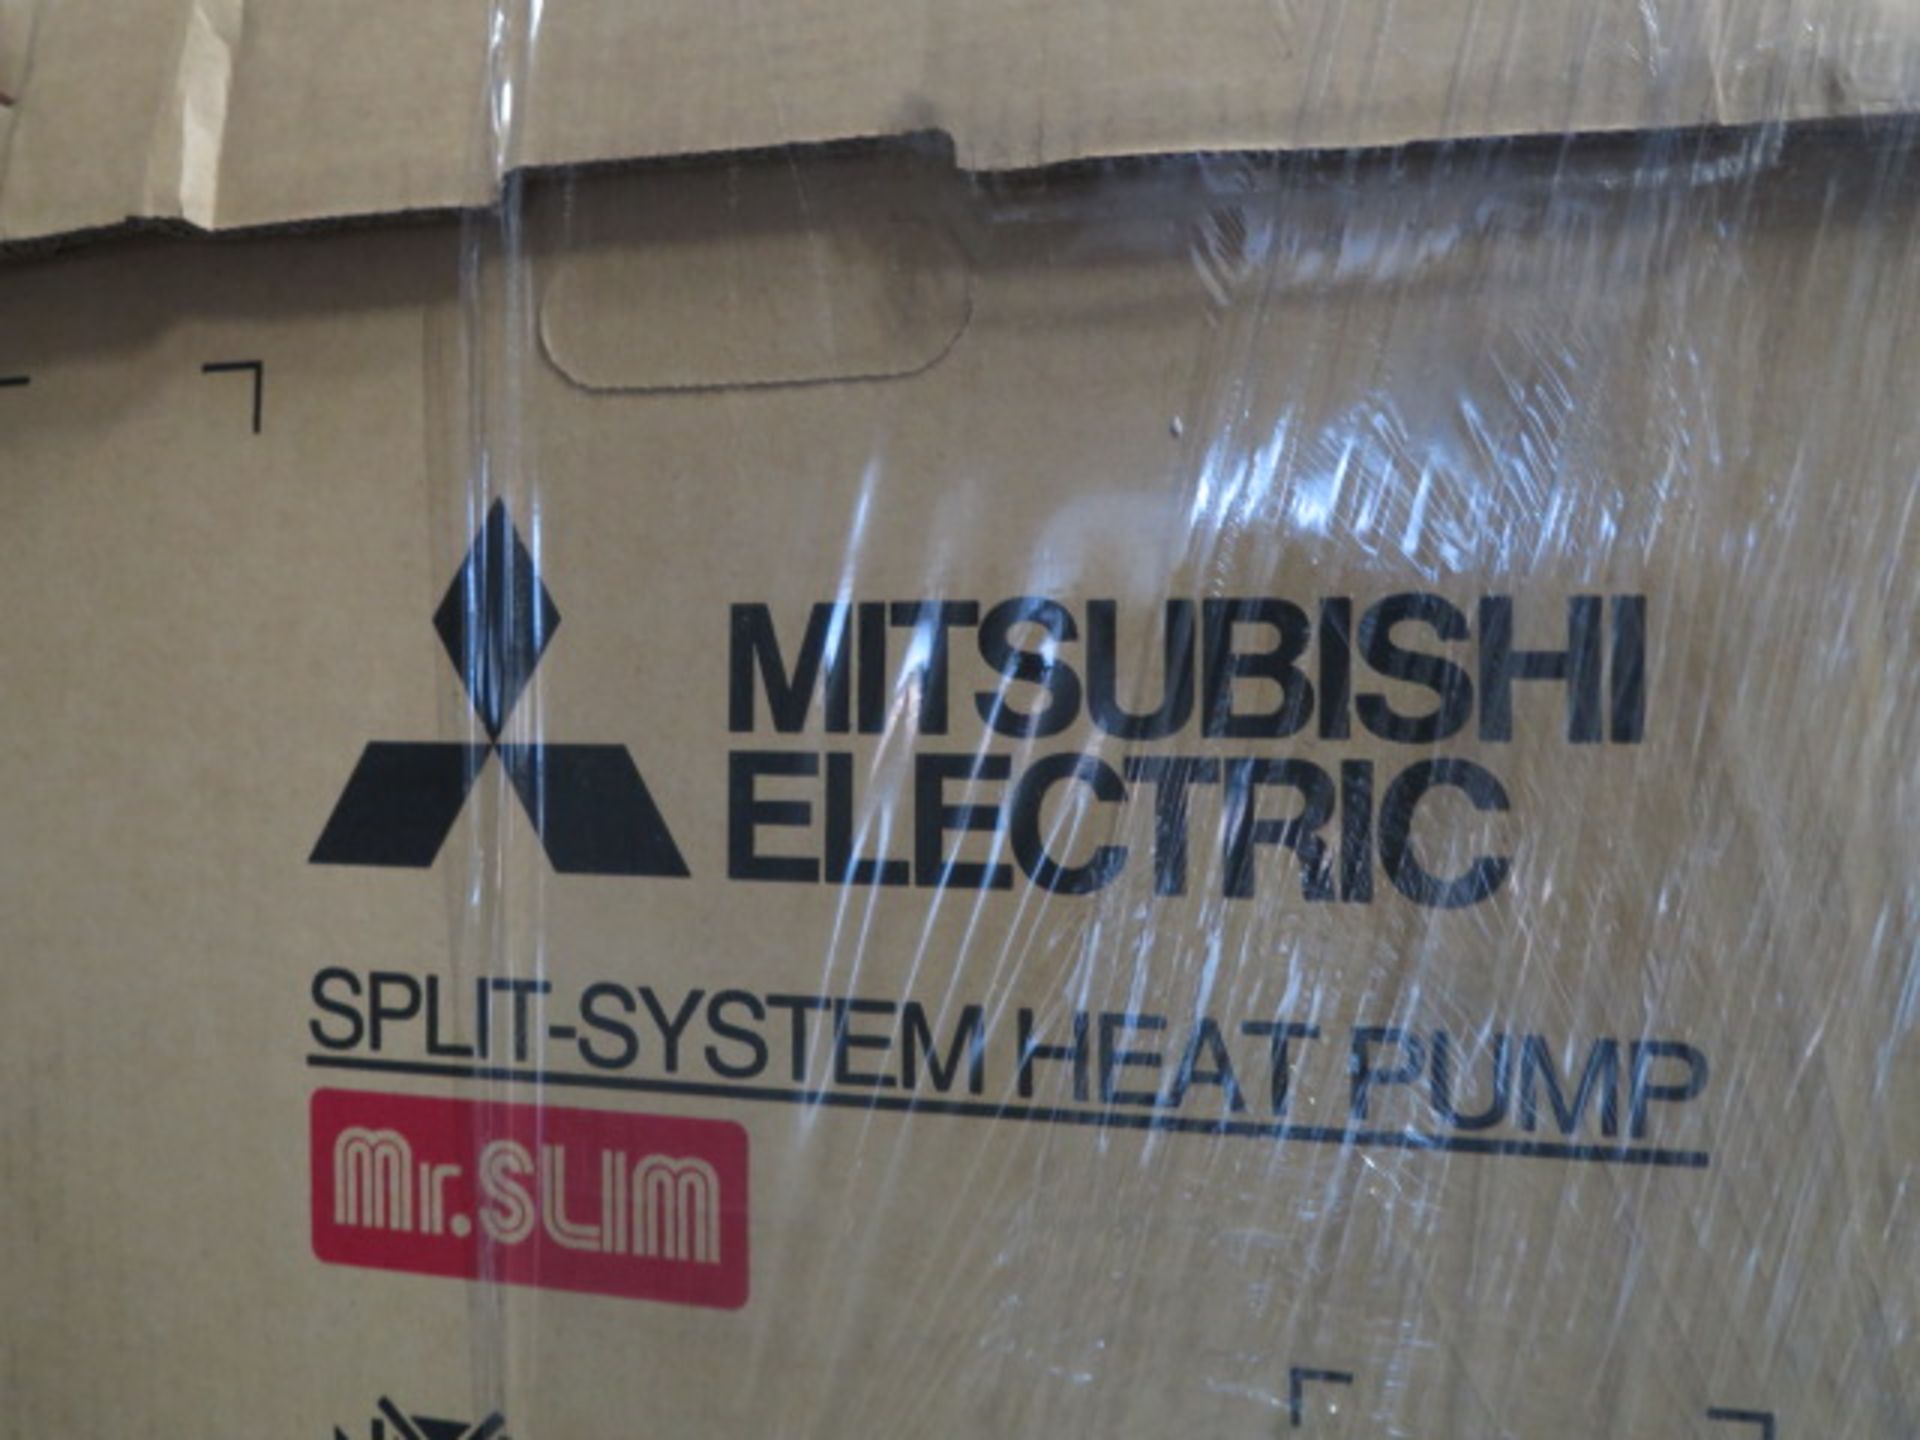 Mitsubishi PUZ-A24NHA6 Split System Heat Pump w/ PKA-A24KA6TH Ceiling Mounted Blower 208/230V-1ph - Image 5 of 6